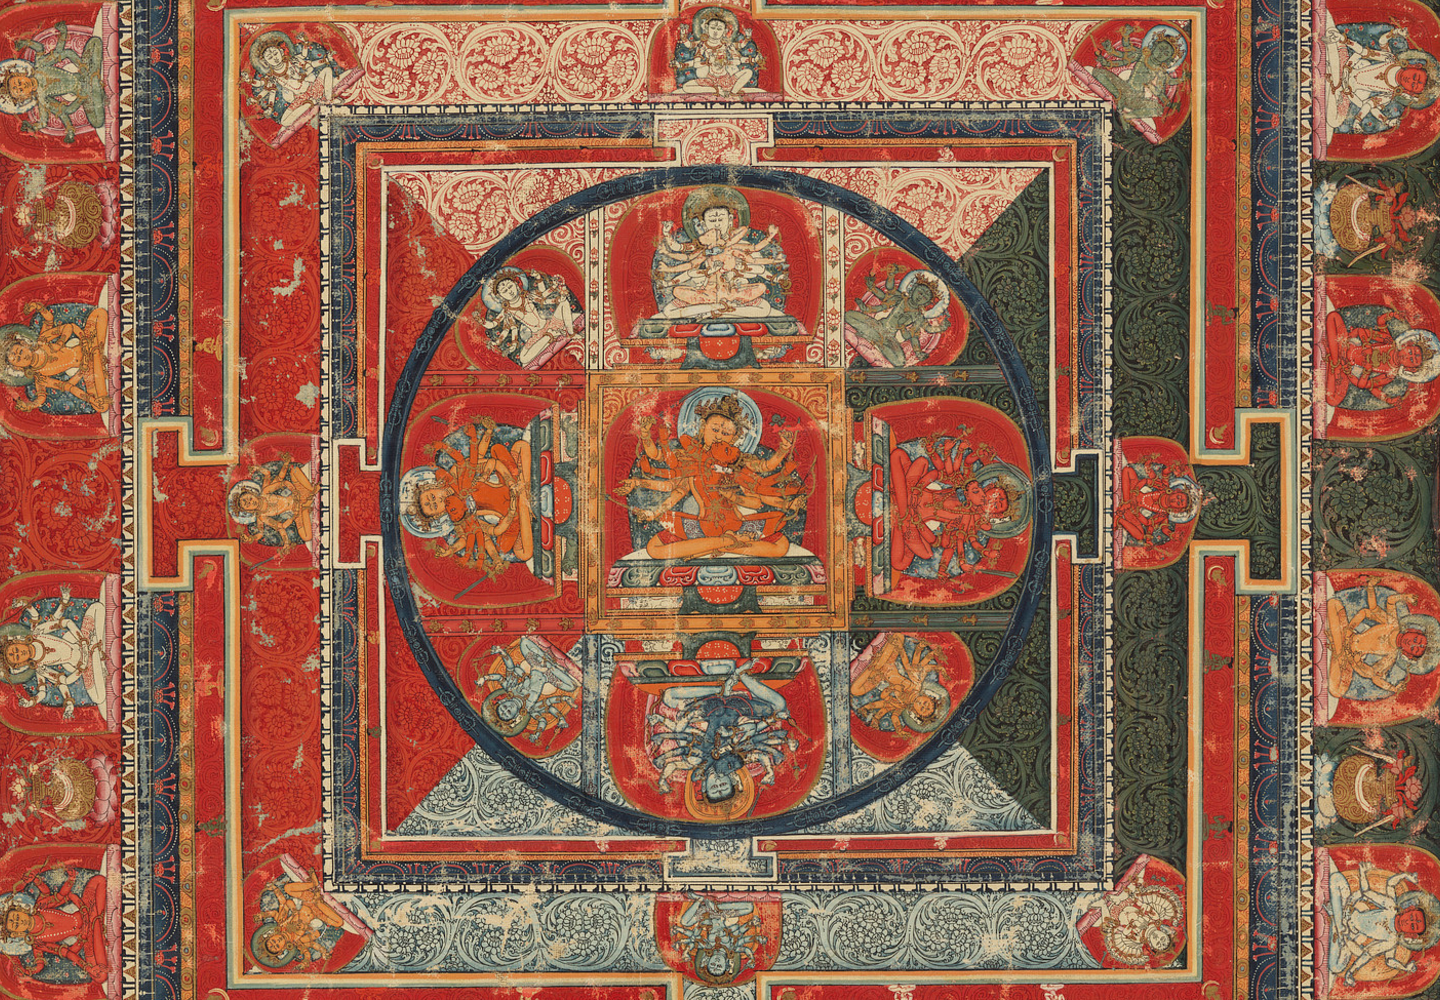 Bodhisattvas of Wisdom, Compassion, and Power